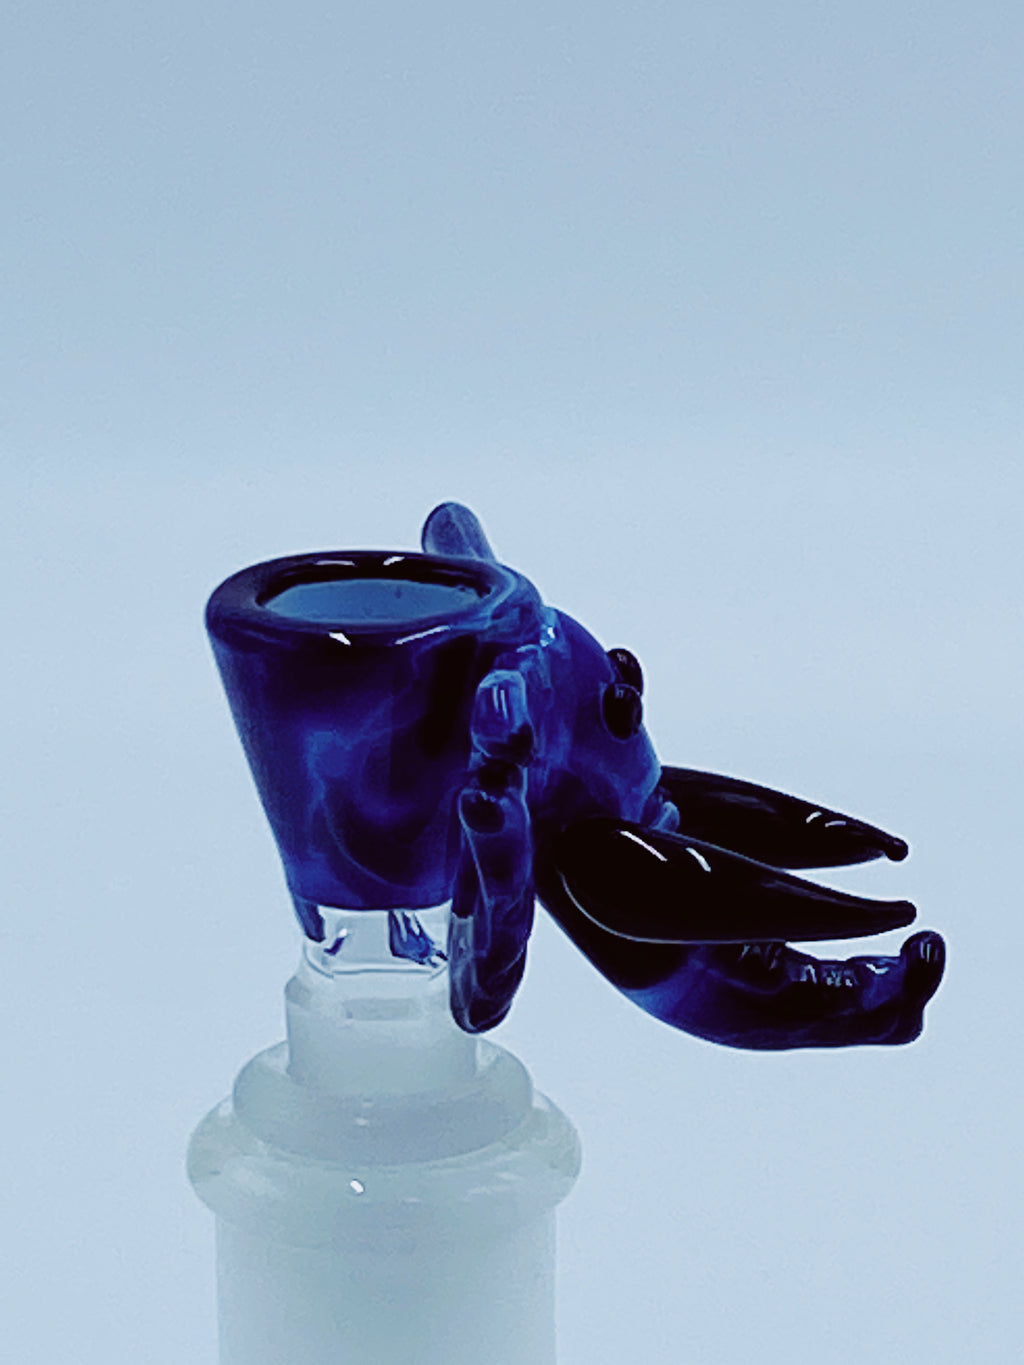 TEAR E BLUE ELEPHANT - Smoke Country - Land of the artistic glass blown bongs